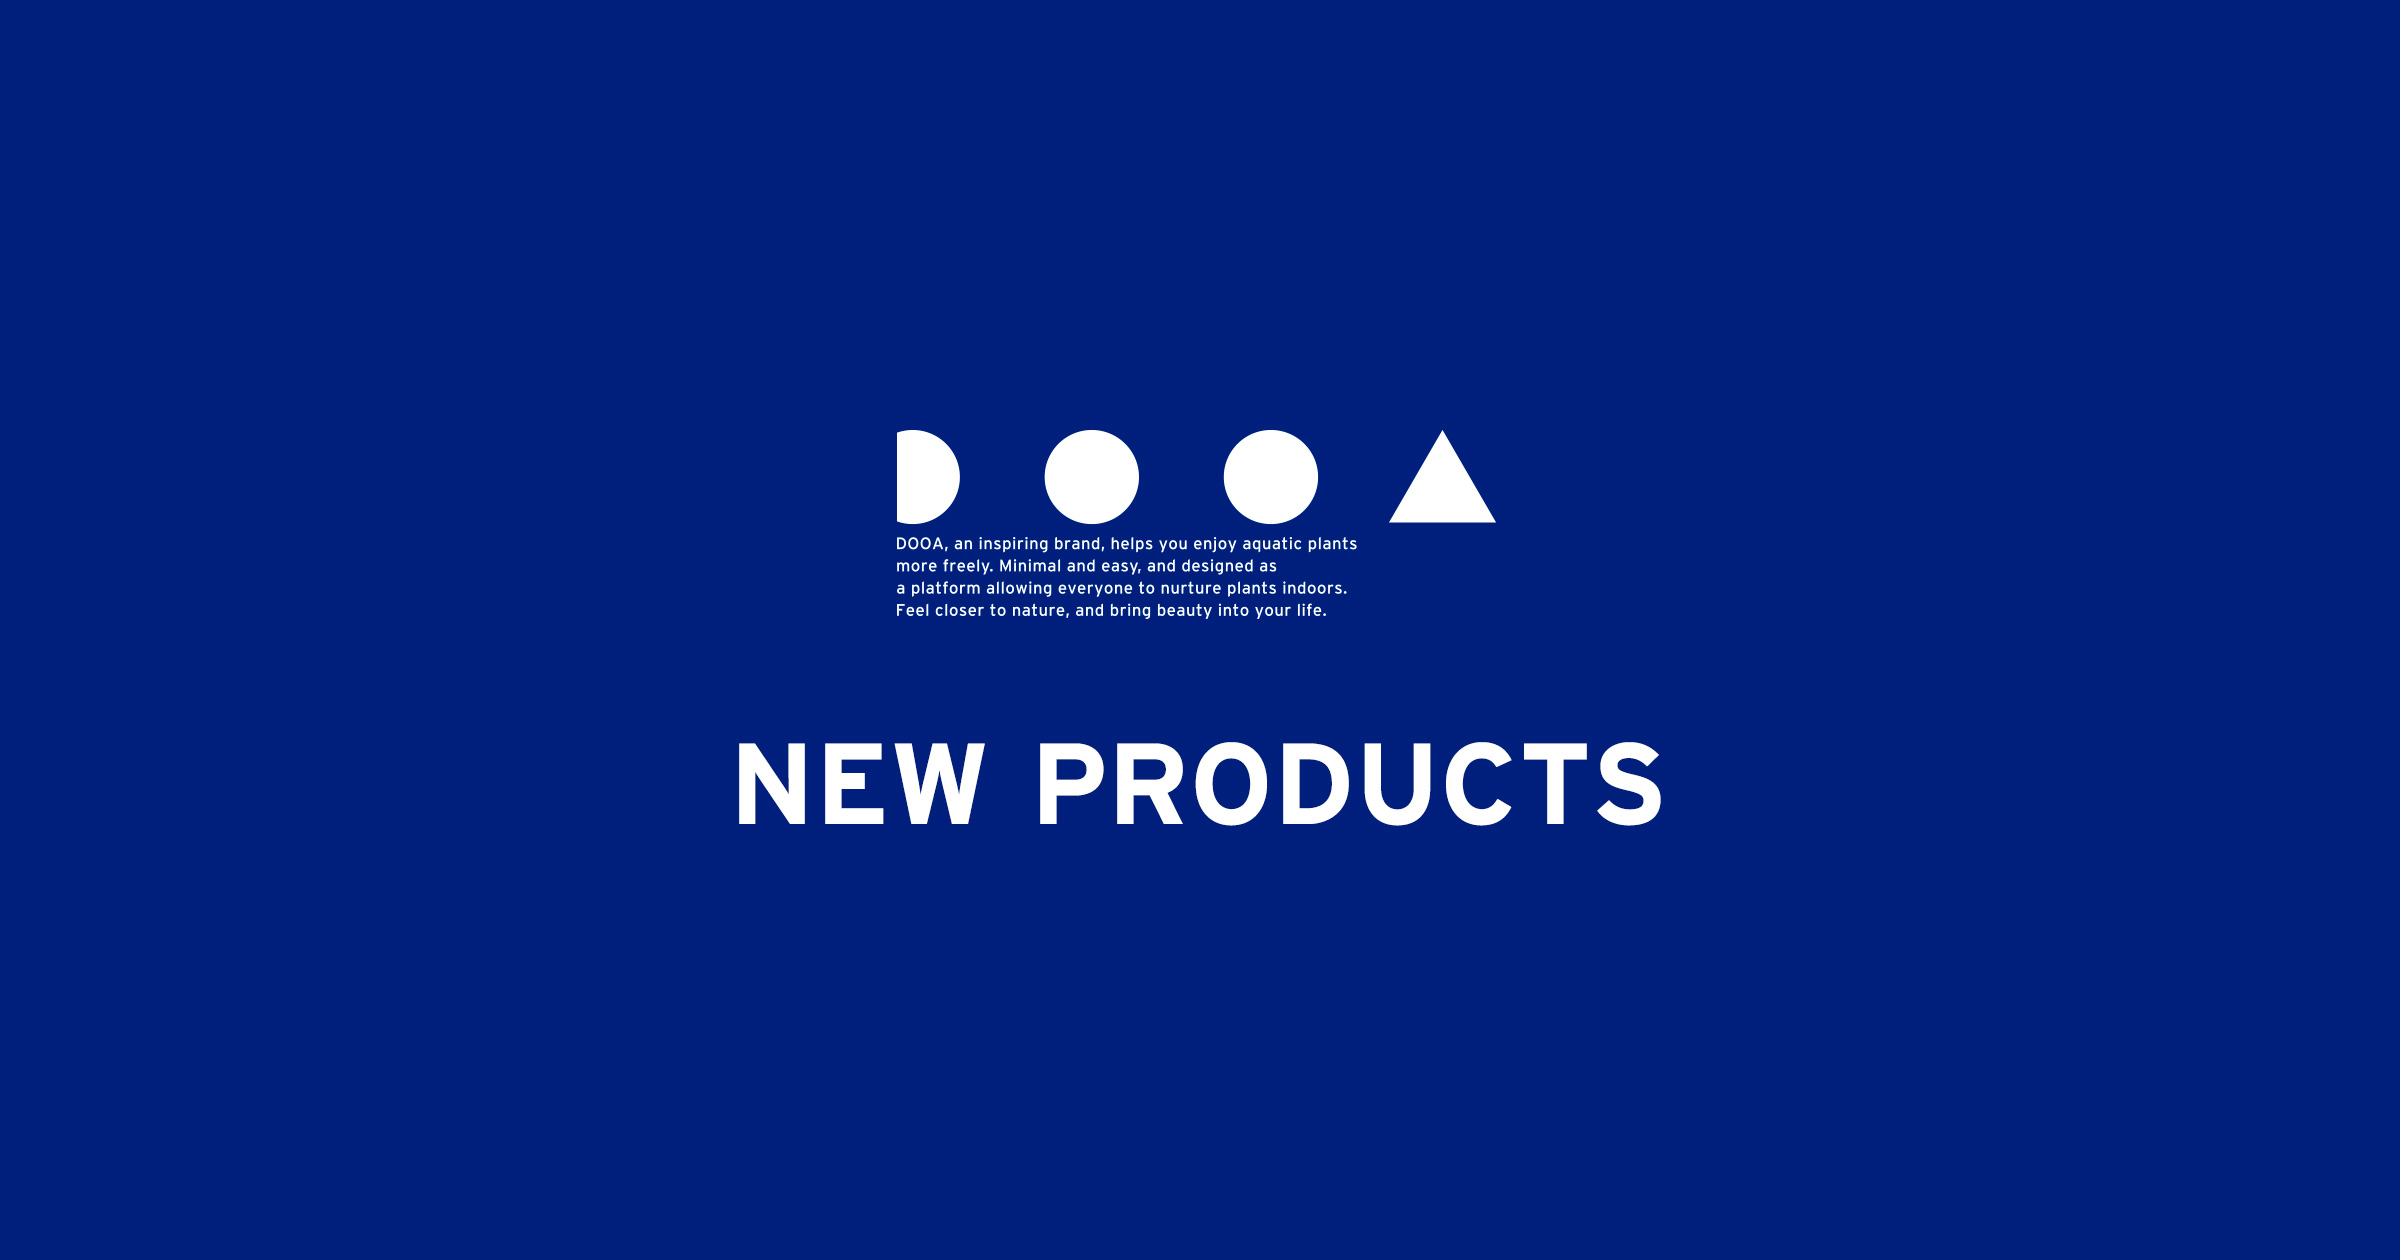 DOOA NEW PRODUCTS 「ますます楽しくなるDOOAの新発想」